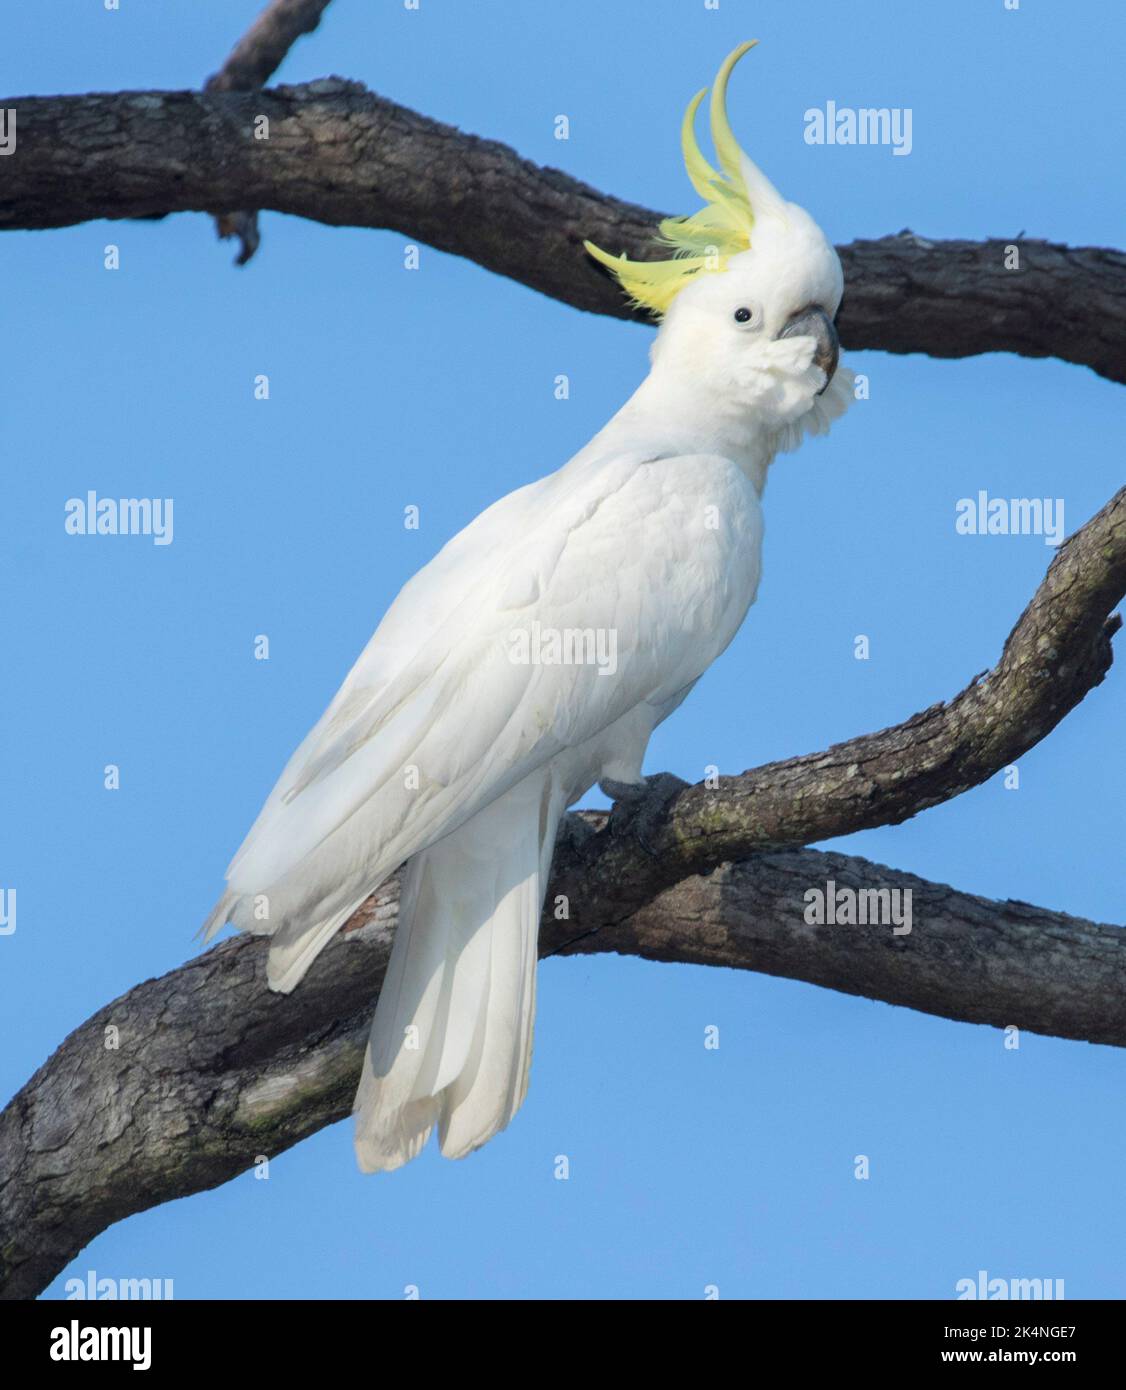 White Sulphur-crested Cockatoo, Cacatua galerita, with crest raised, perched on dead tree against blue sky in Australia Stock Photo